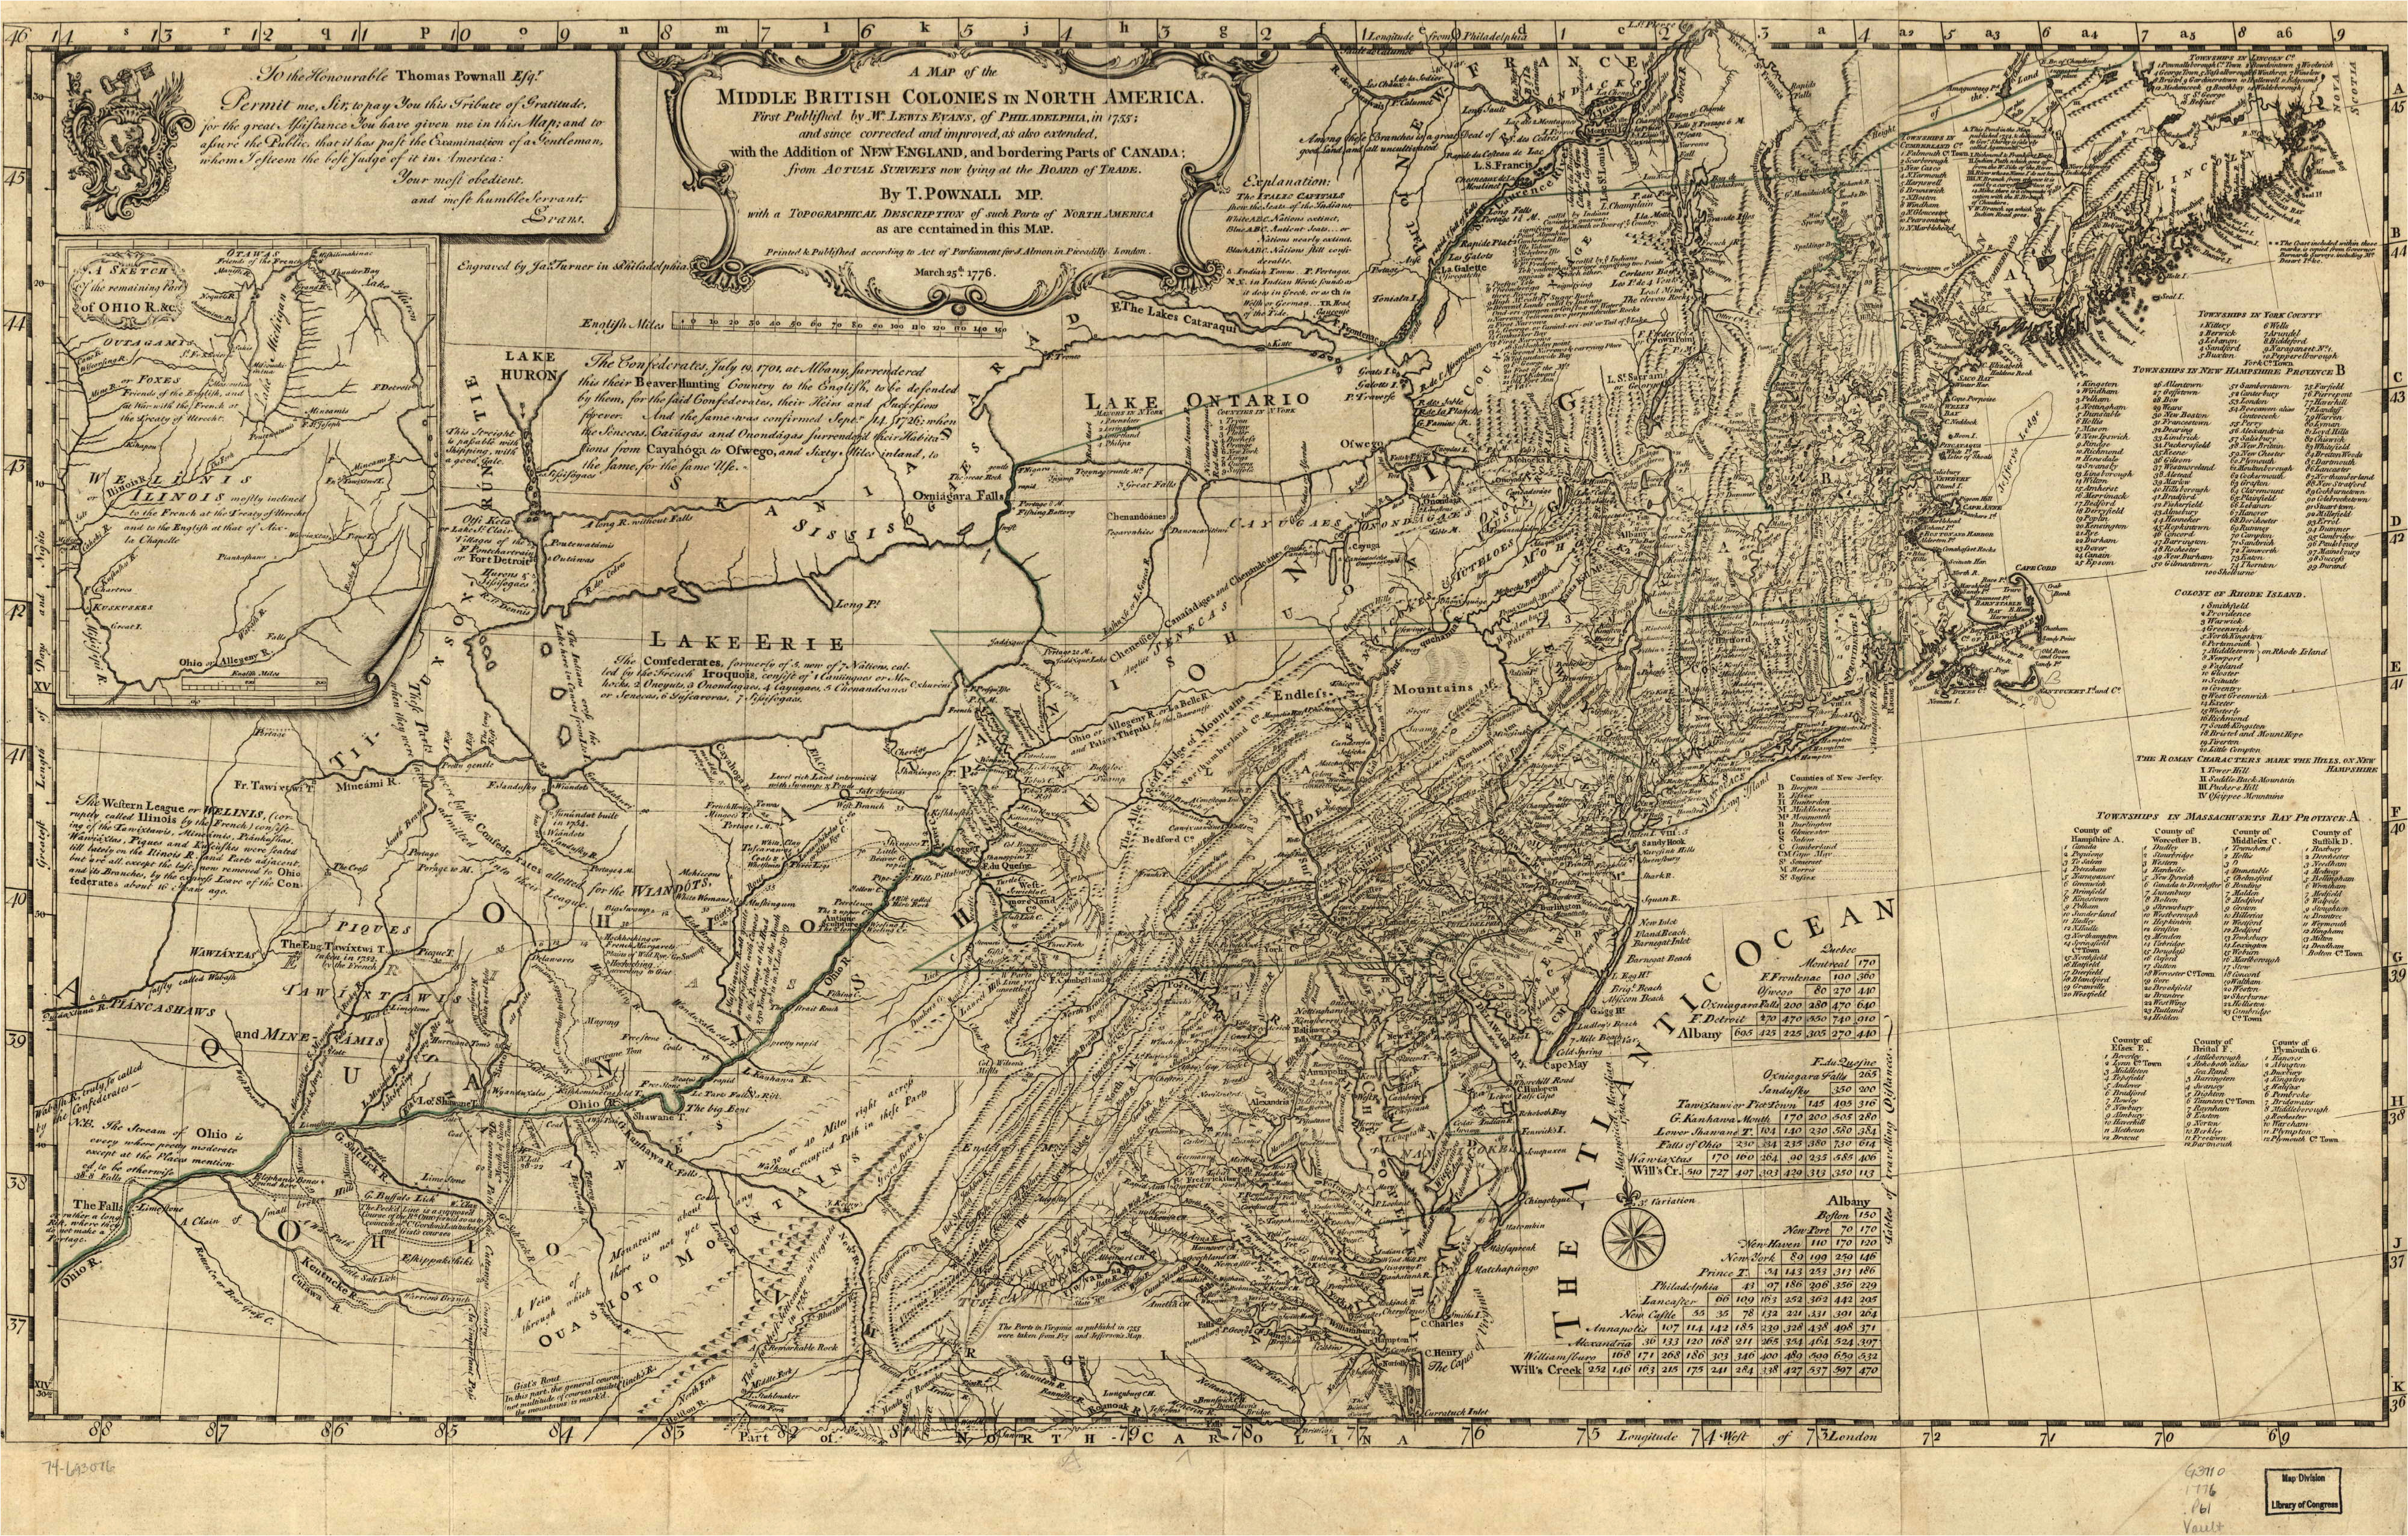 Map Of Galloway Ohio 1775 to 1779 Pennsylvania Maps